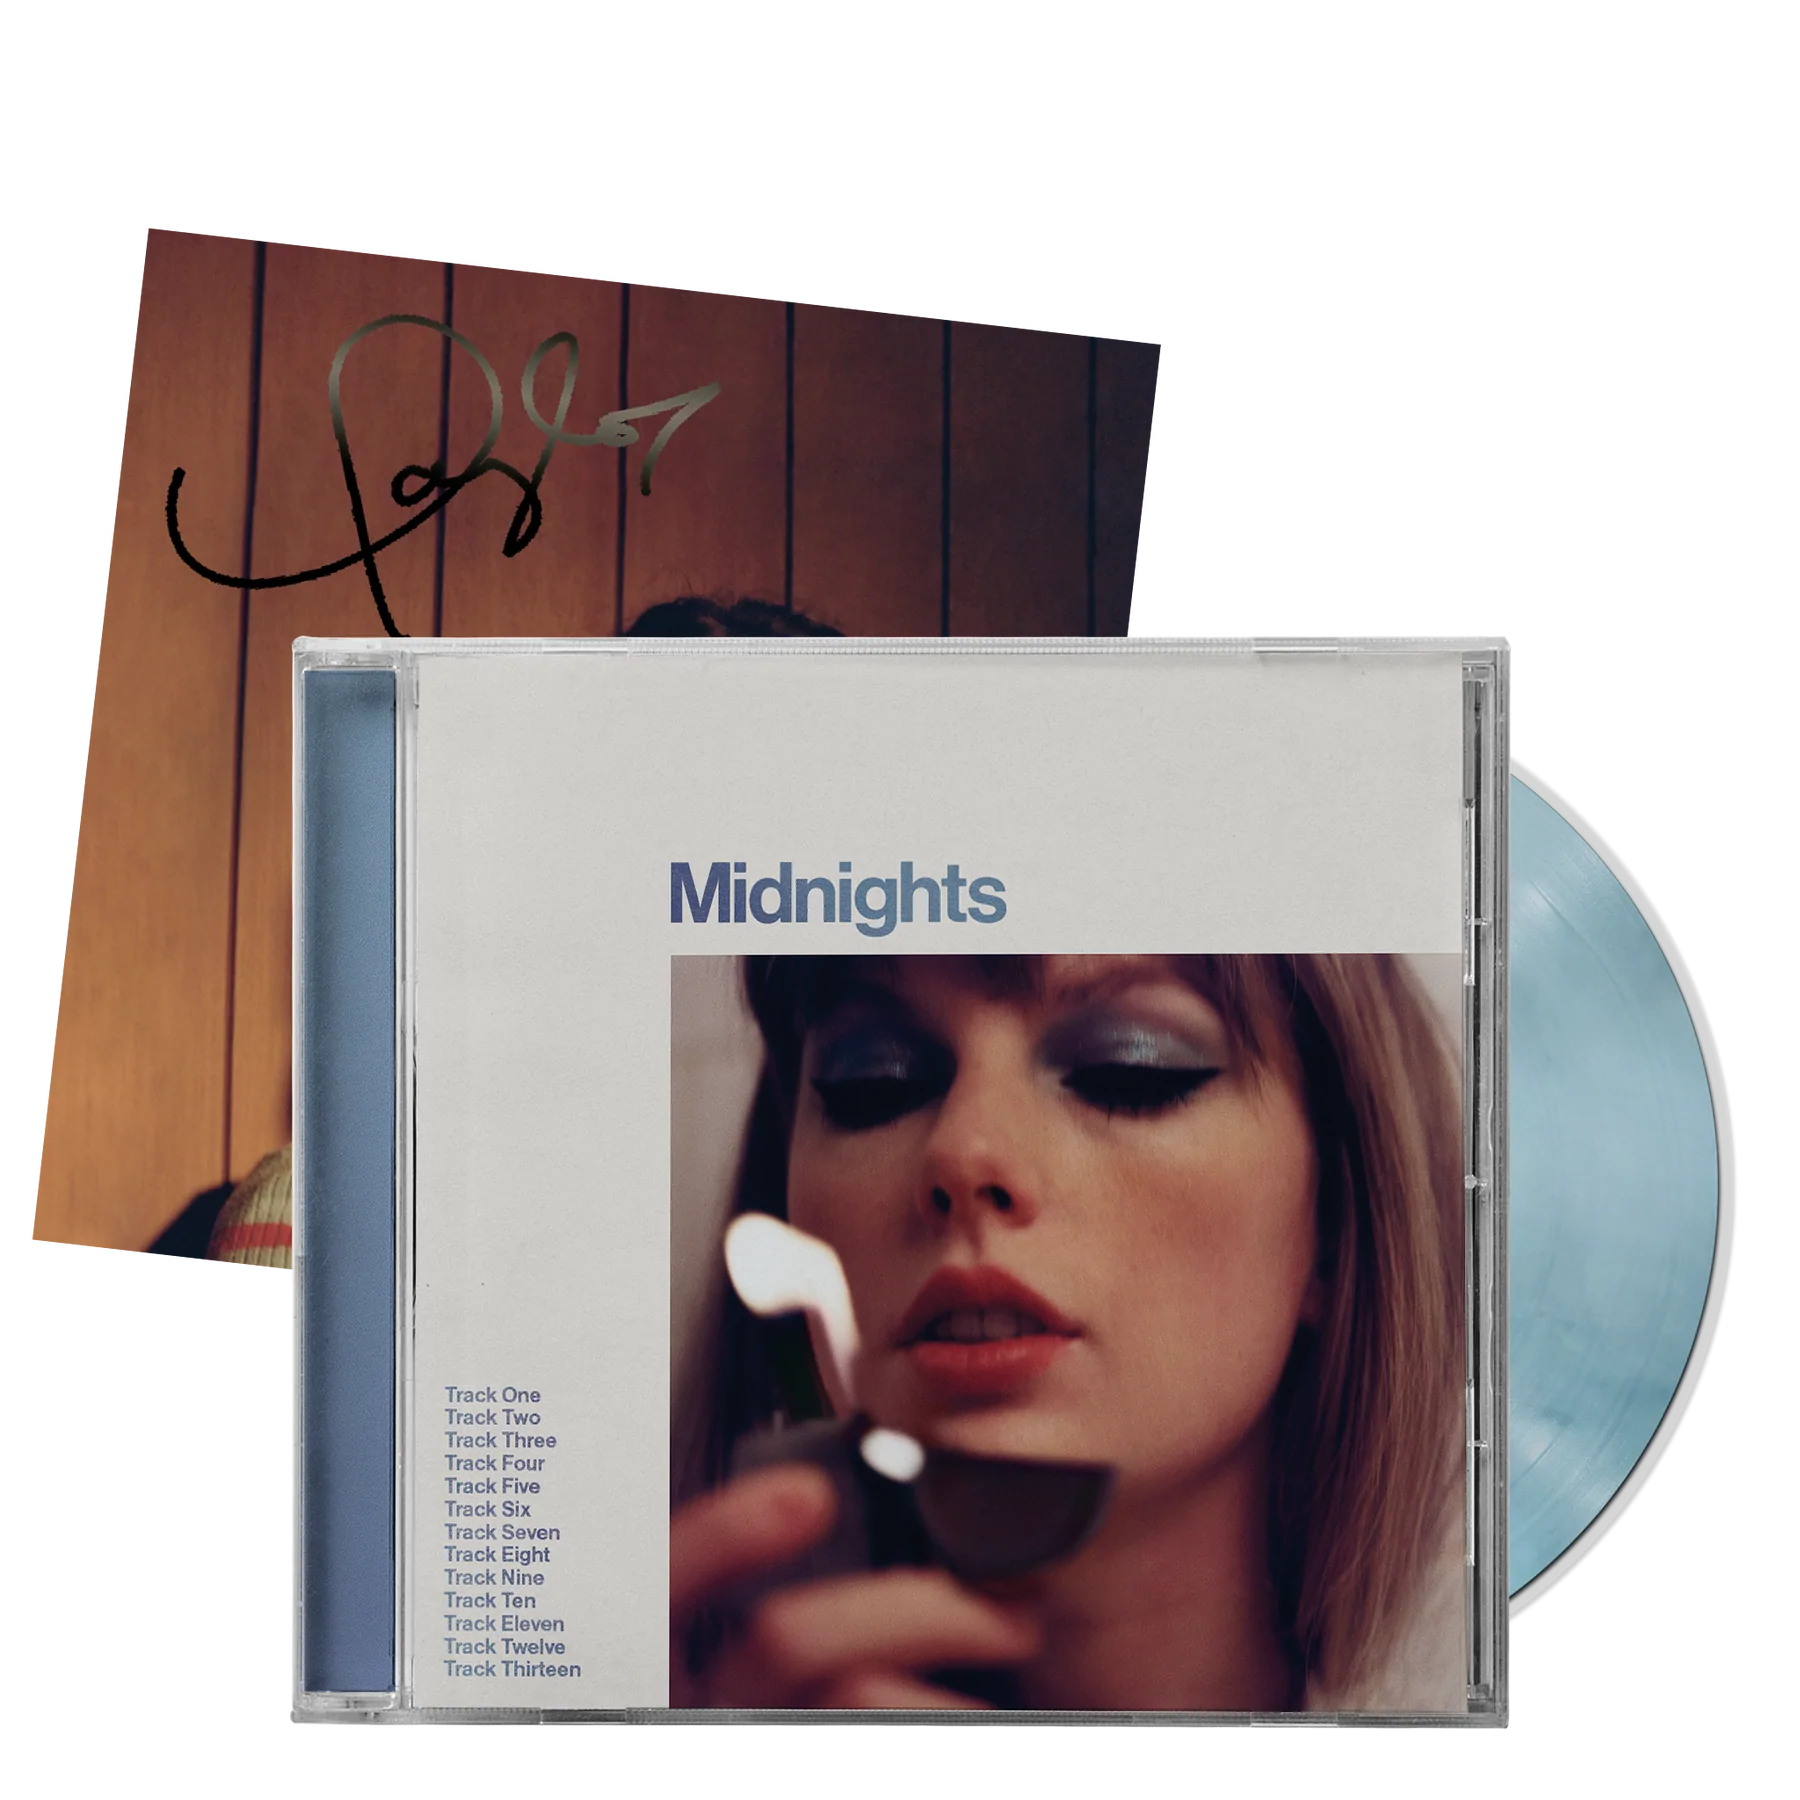 Midnights тейлор. Midnights Taylor. Midnights Тейлор Свифт. Taylor Swift Midnights CD. Midnight Taylor Swift Cover альбом обложка.